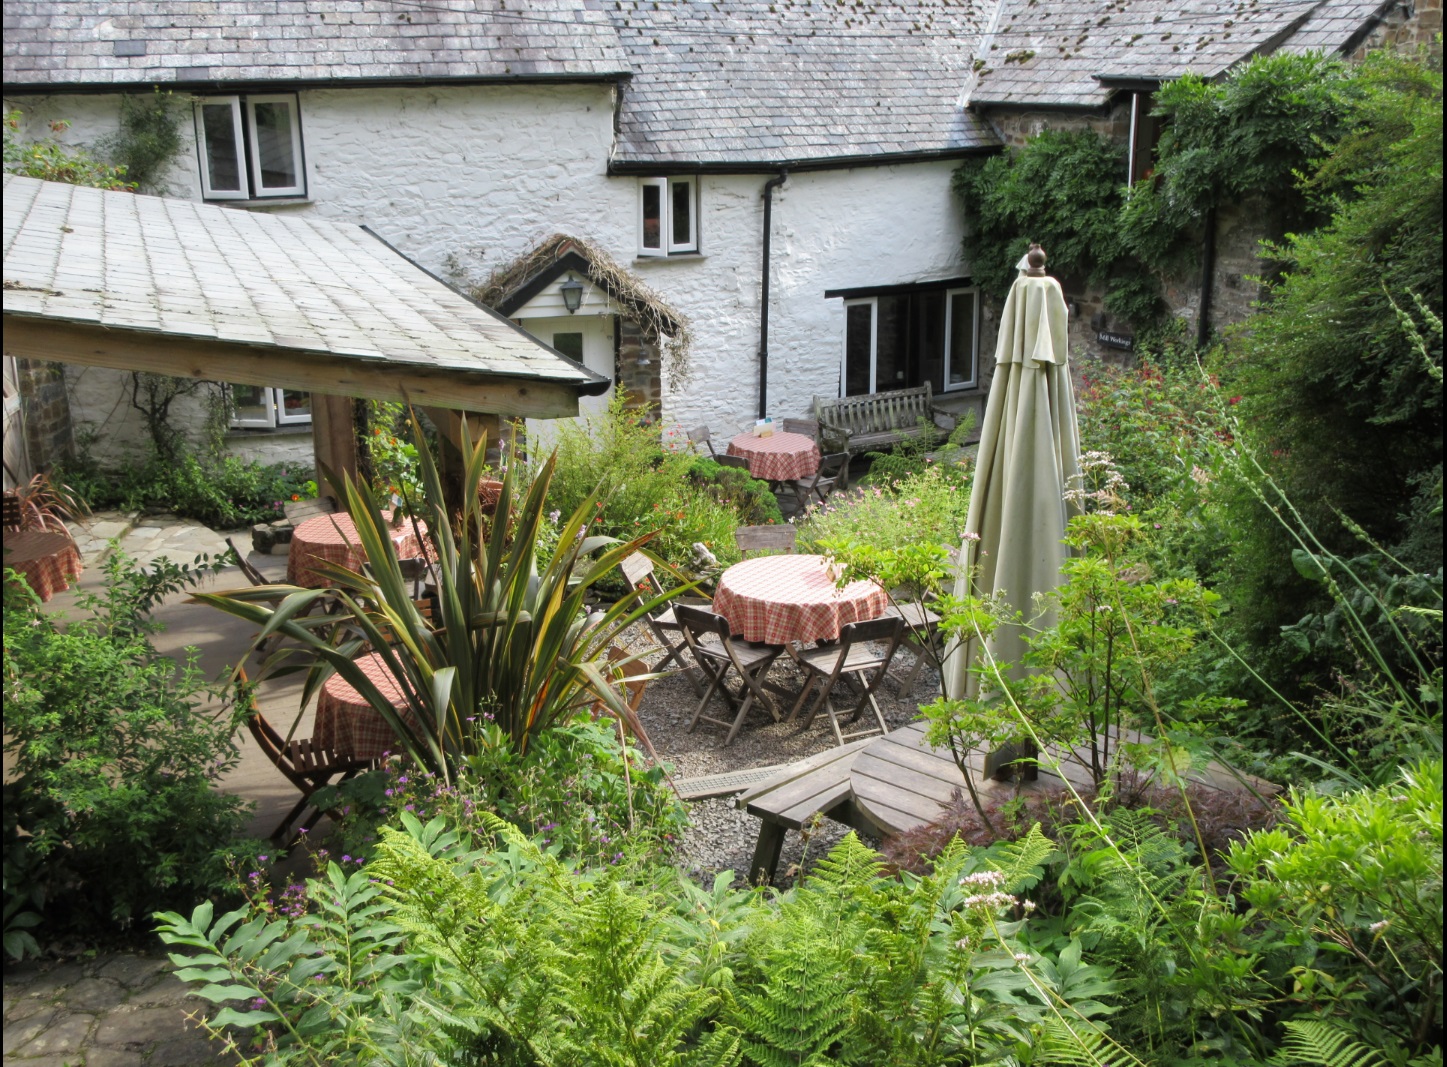 The tea terrace at Docton Mill Gardens and Tearoom, Hartland, North Devon